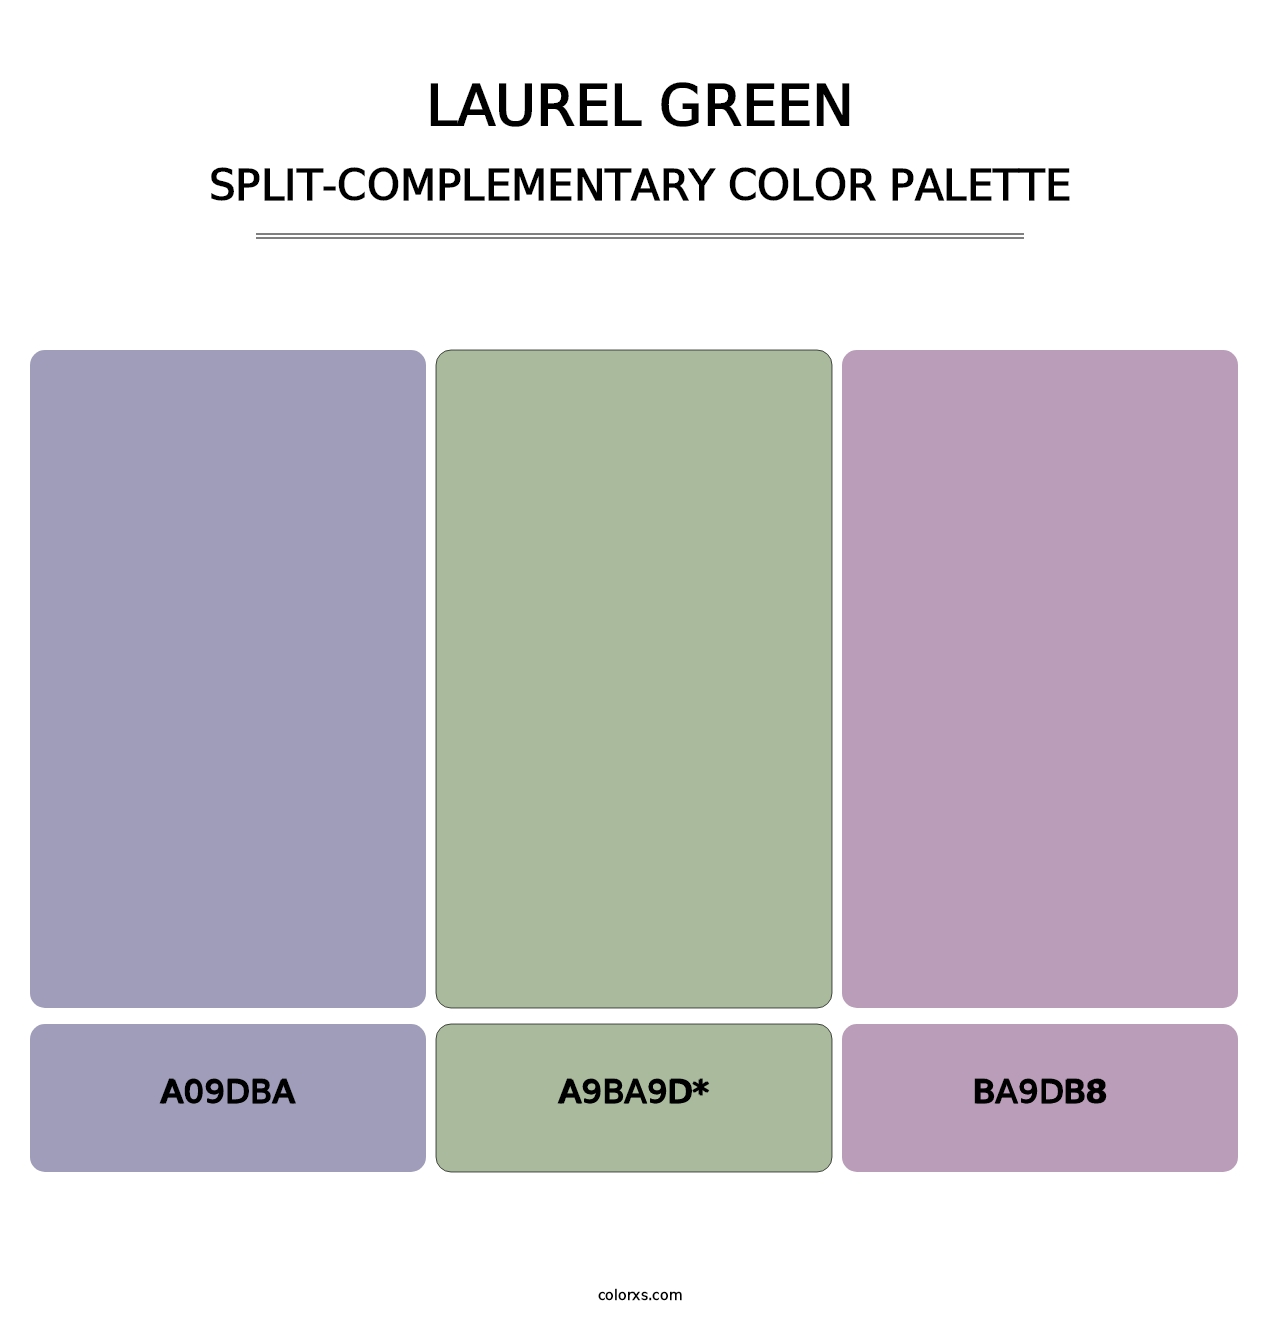 Laurel Green - Split-Complementary Color Palette